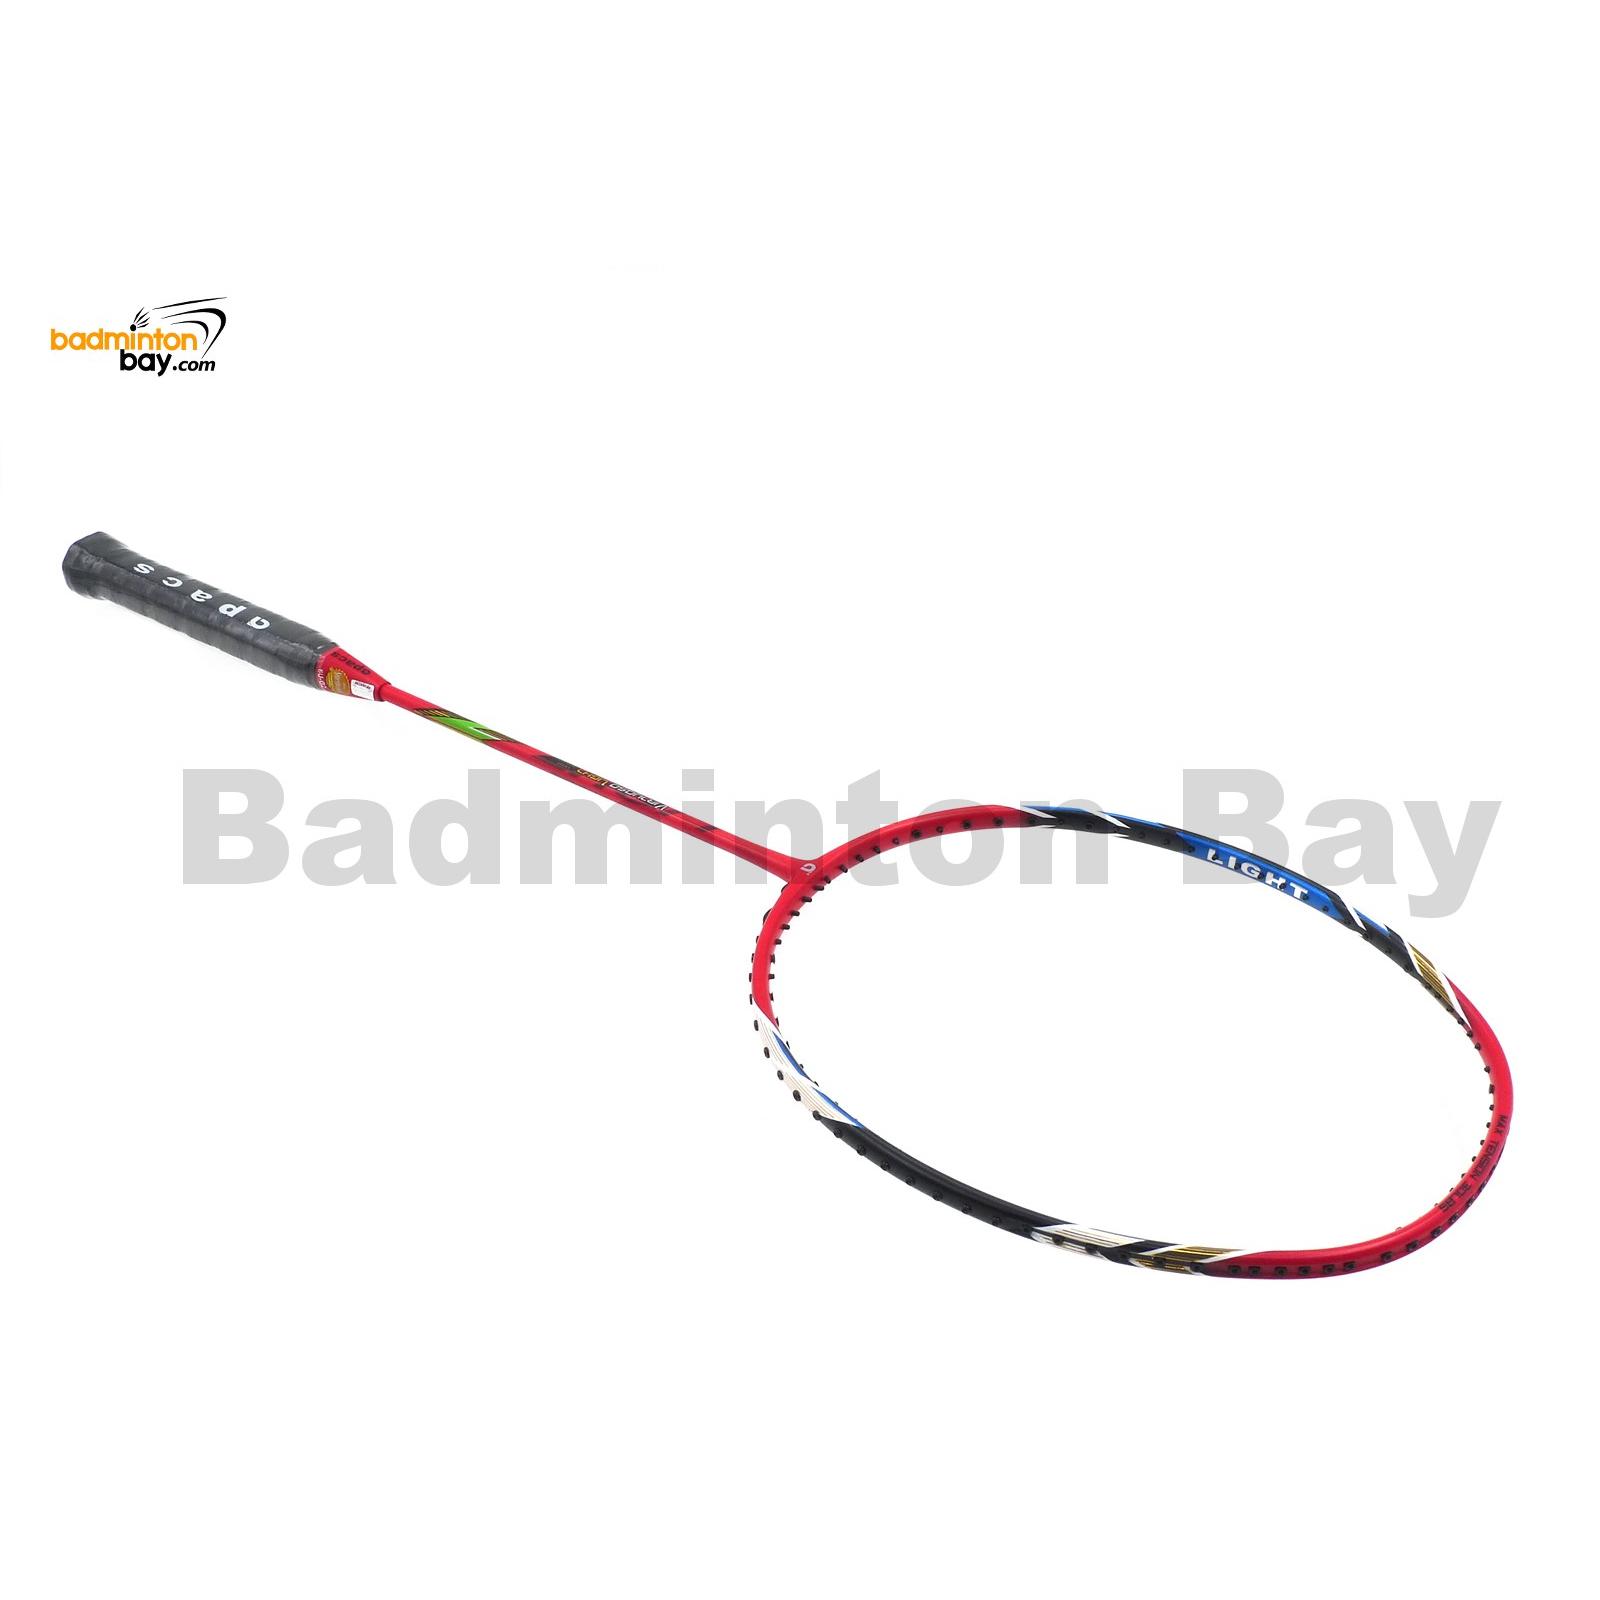 2x Apacs Virtuoso Light Red 6U Badminton Racket Racquet Free Stringing Grip 